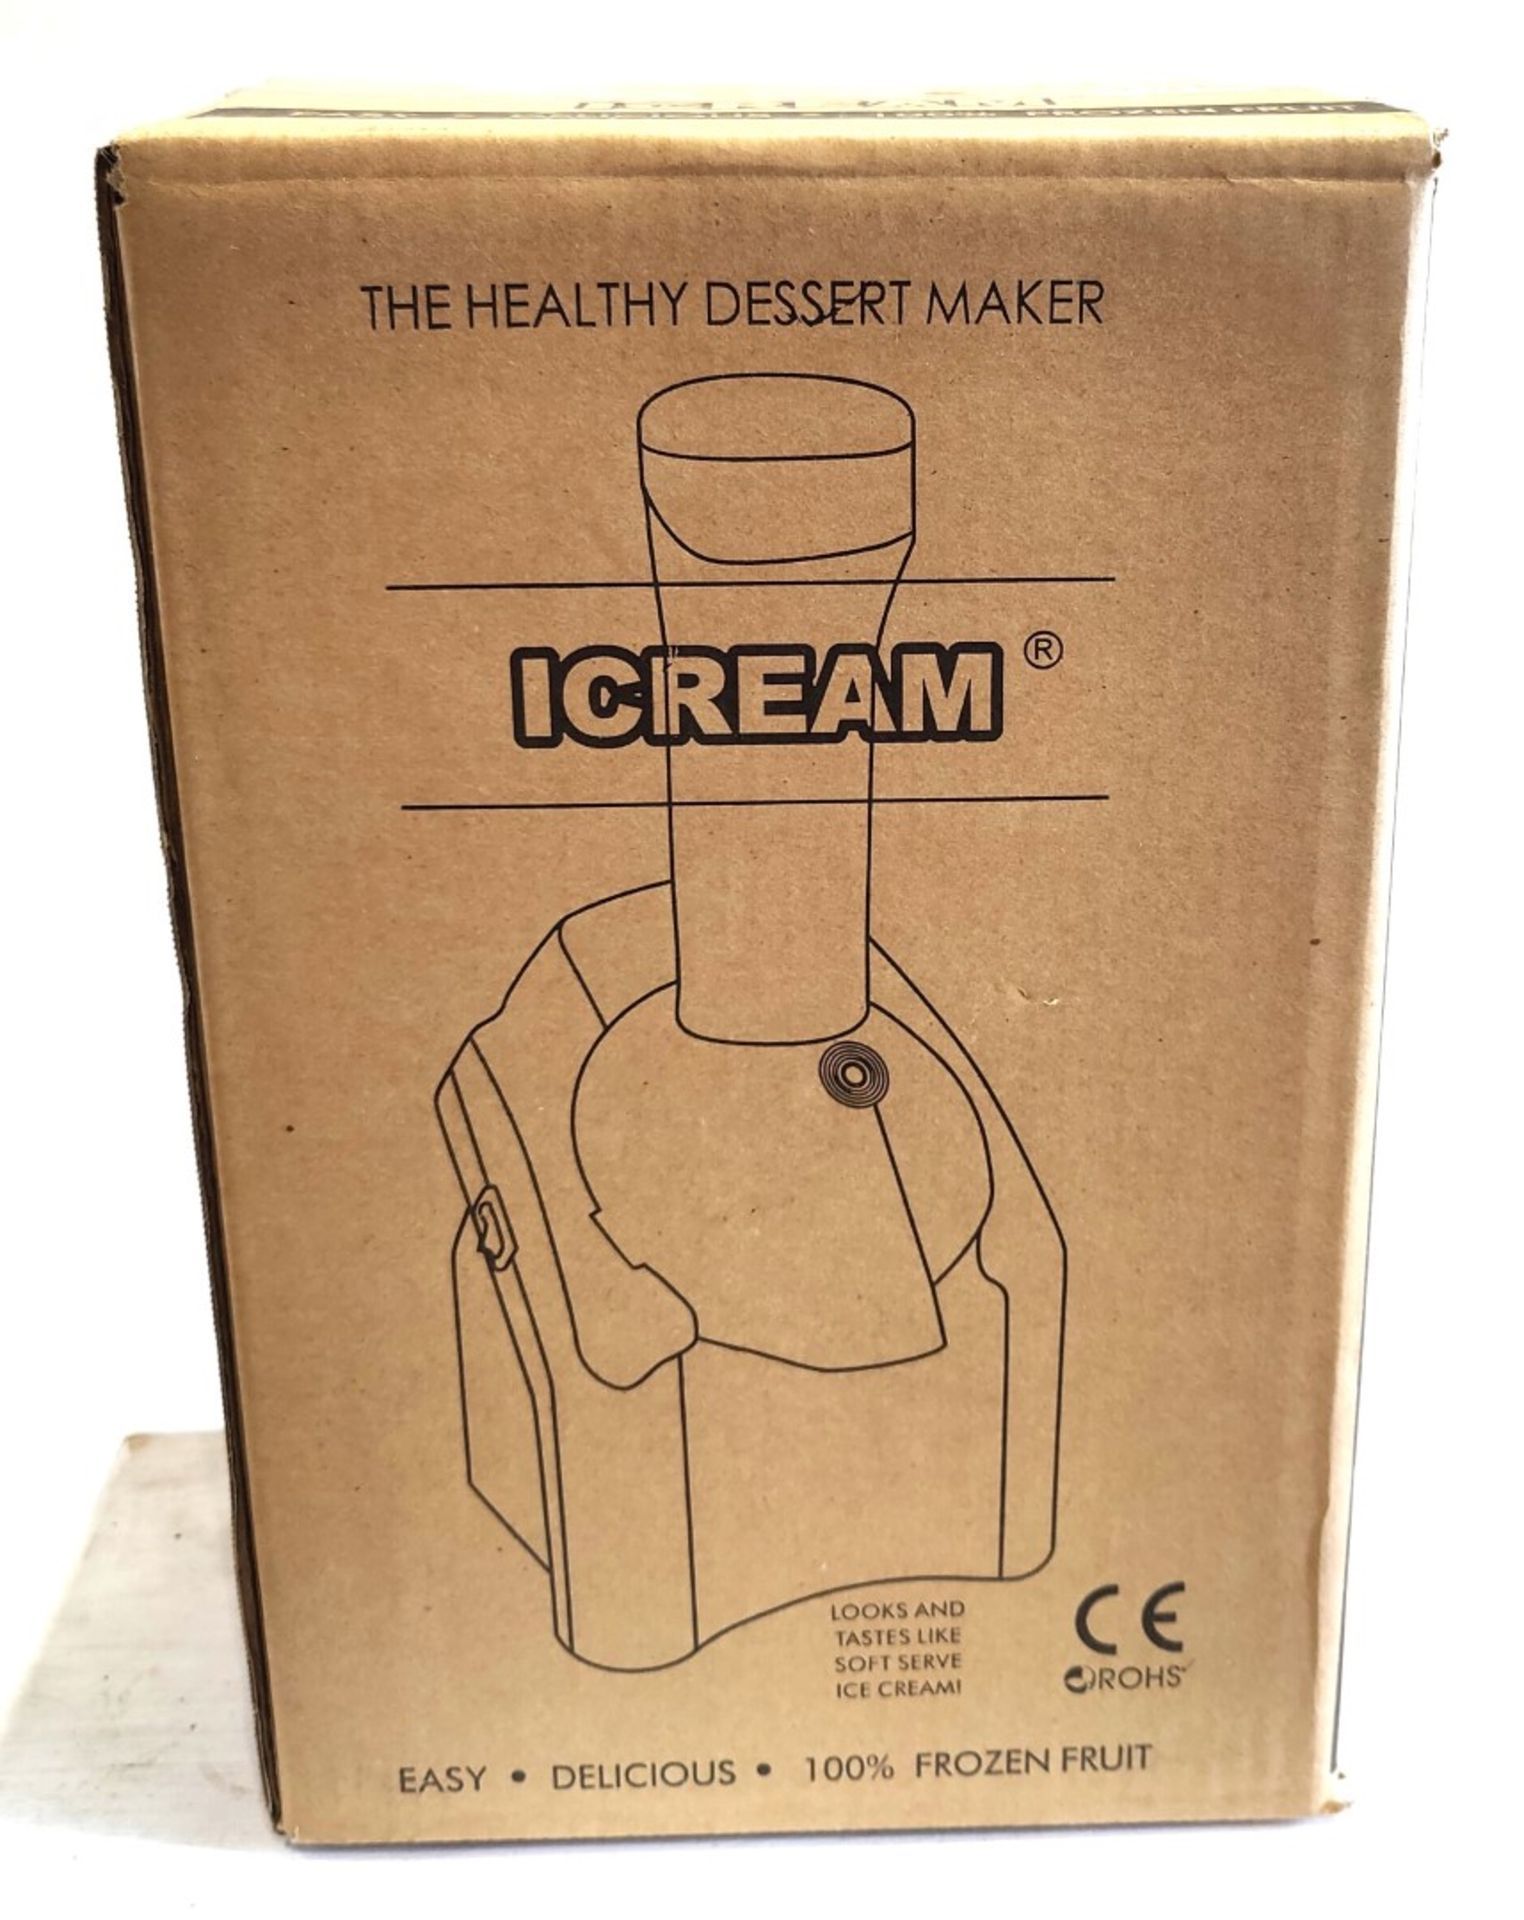 1 x Icream Healthy Desert Maker - Yogurt and Soft Ice Cream Home Appliance - 240v - Brand New - Image 9 of 12